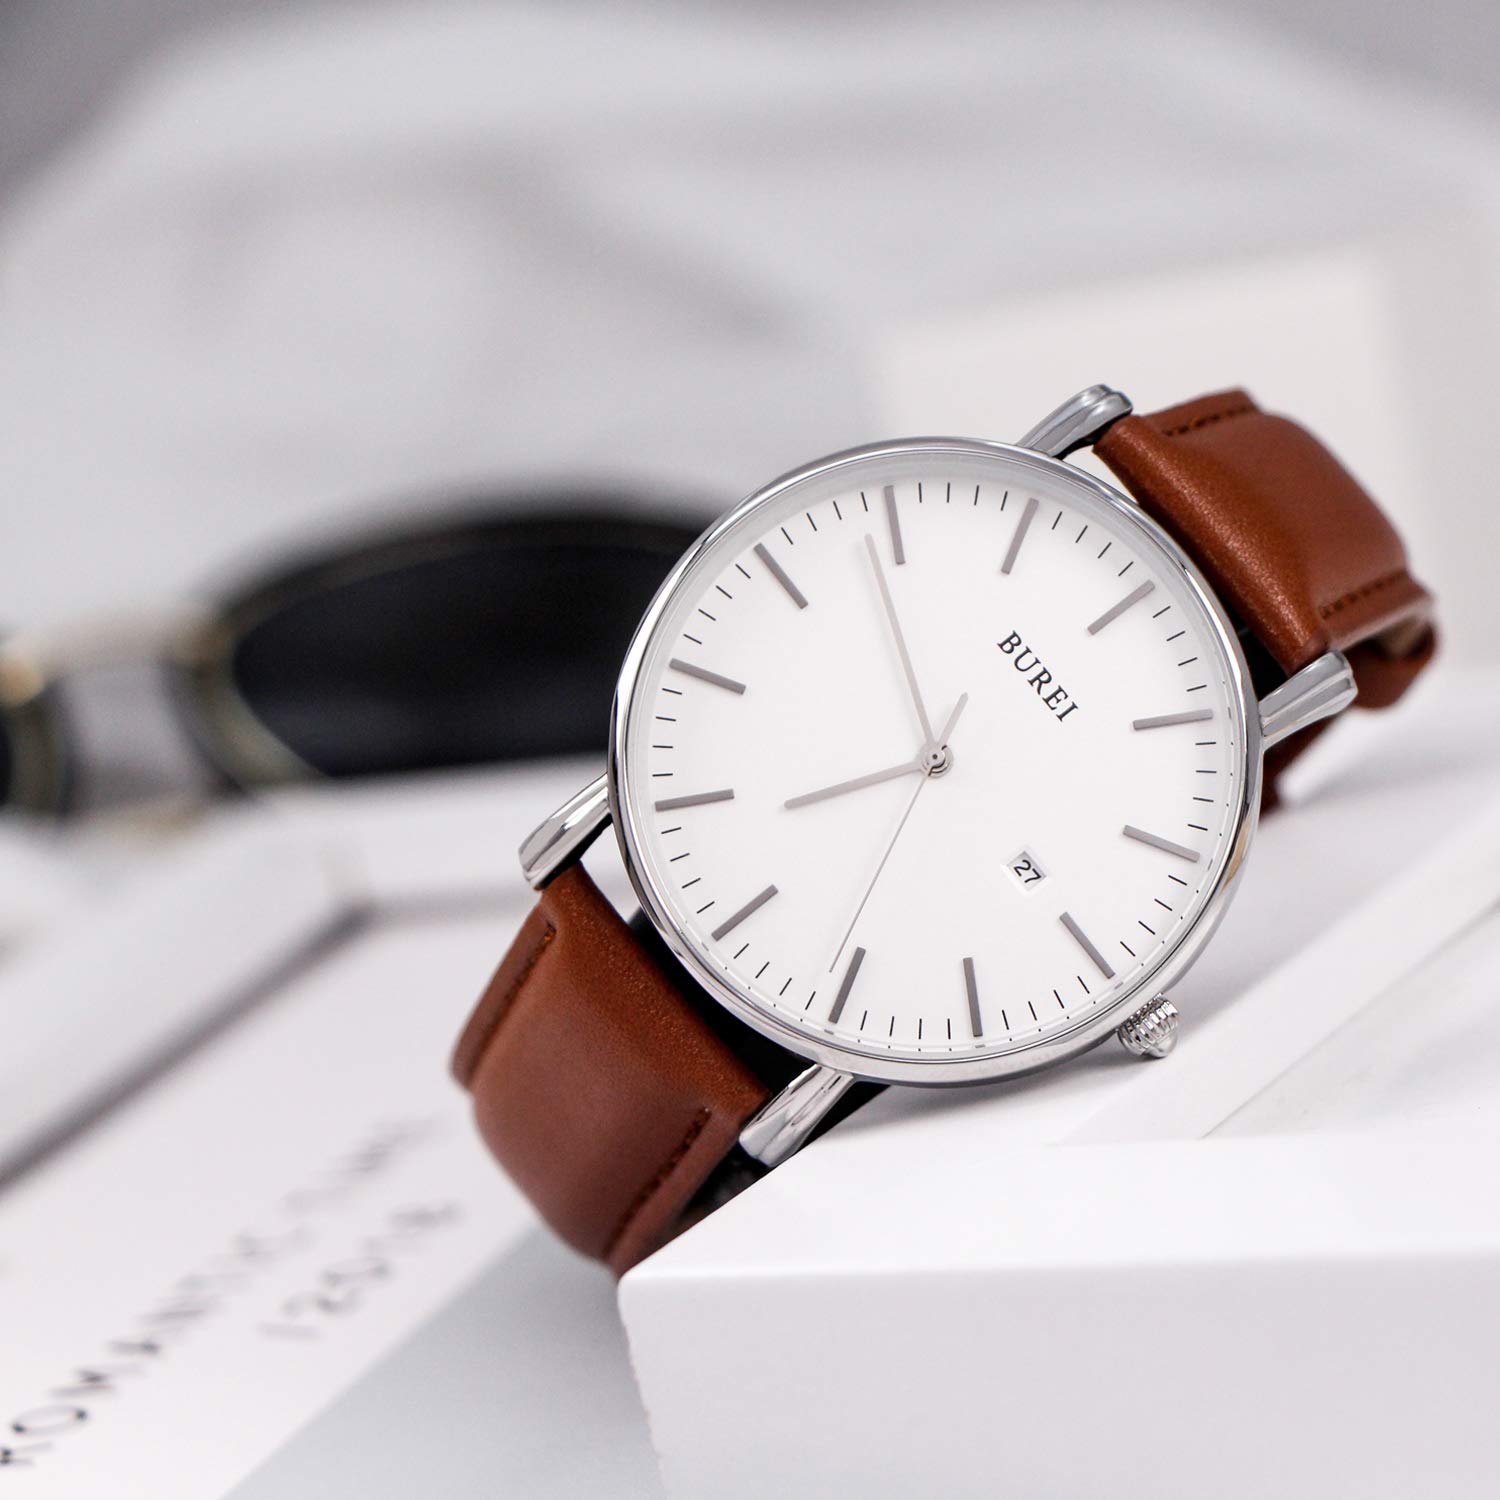 BUREI Men's Fashion Minimalist Wrist Watch Analog Date with Leather Strap